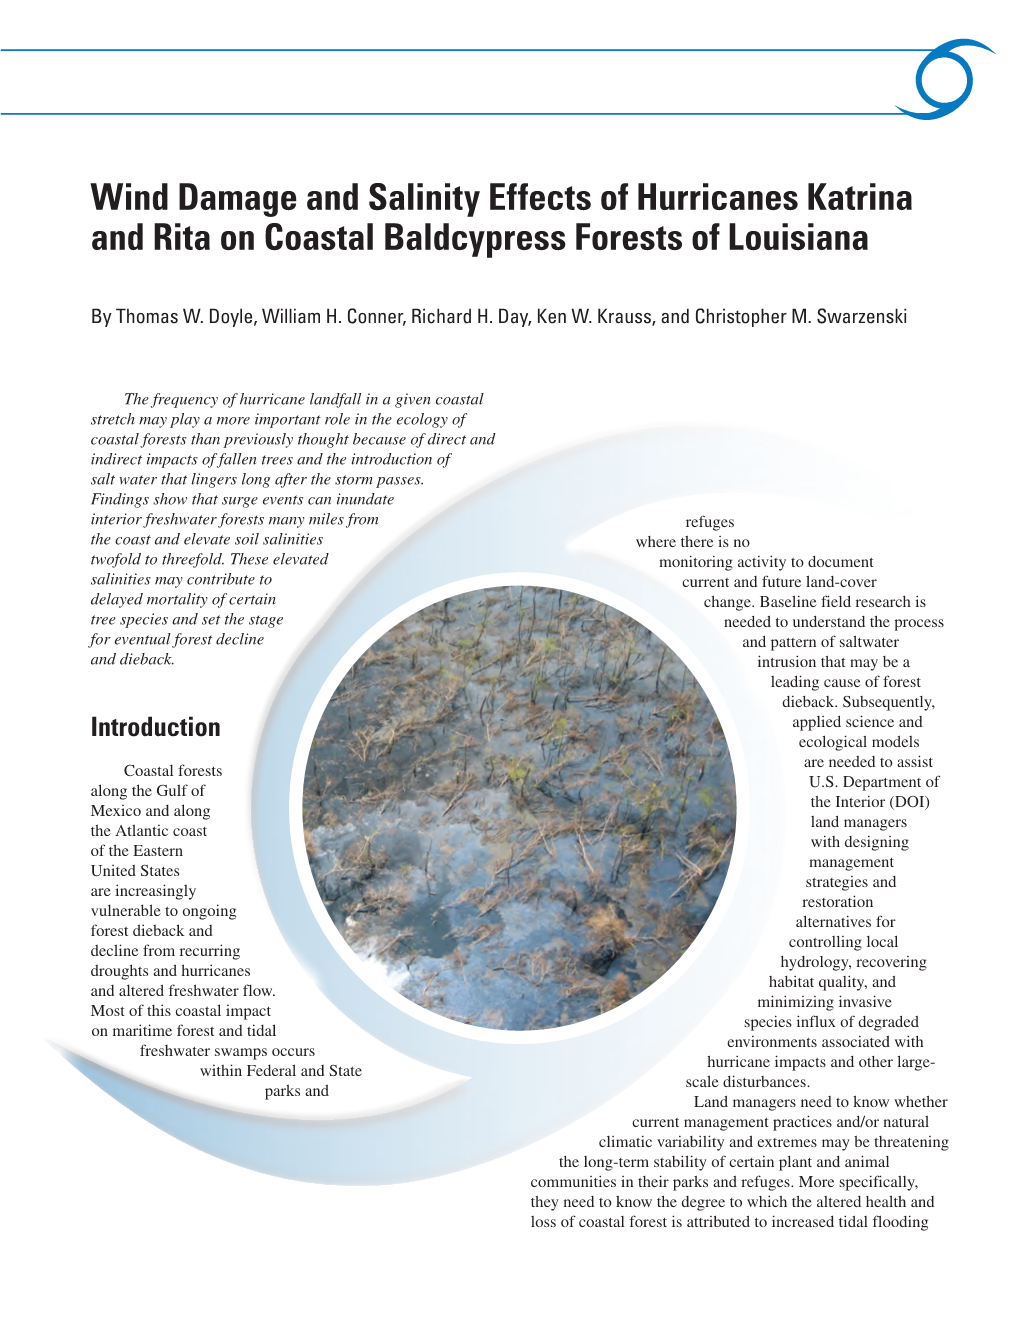 Wind Damage and Salinity Effects of Hurricanes Katrina and Rita on Coastal Baldcypress Forests of Louisiana